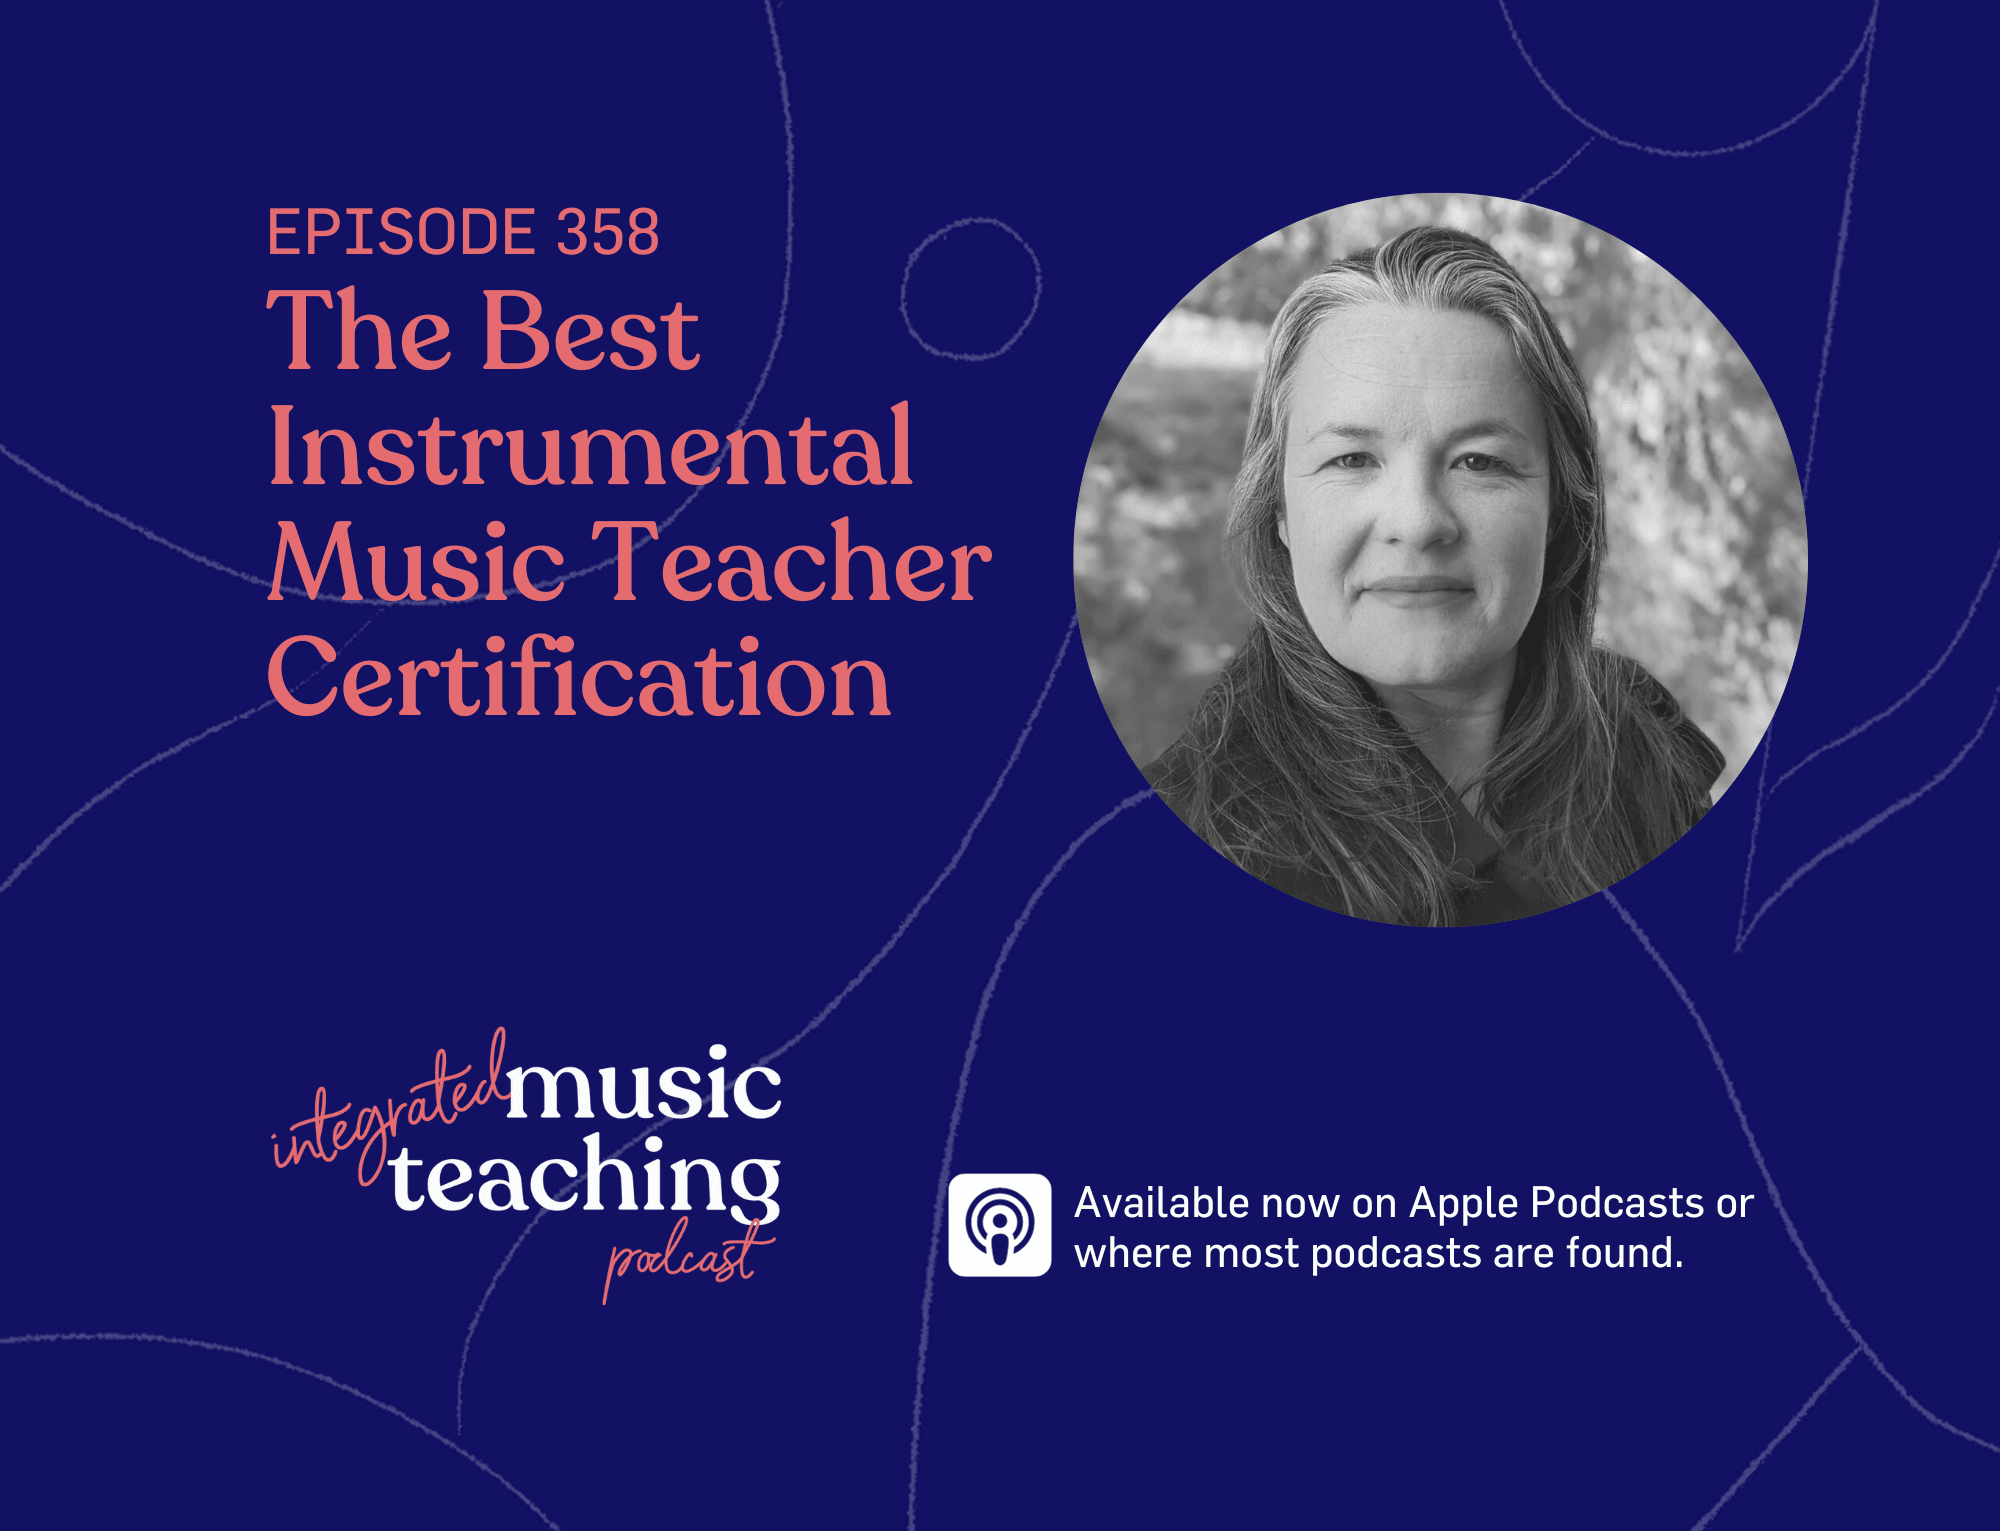 IMT EPISODE 358 The Best Instrumental Music Teacher Certification